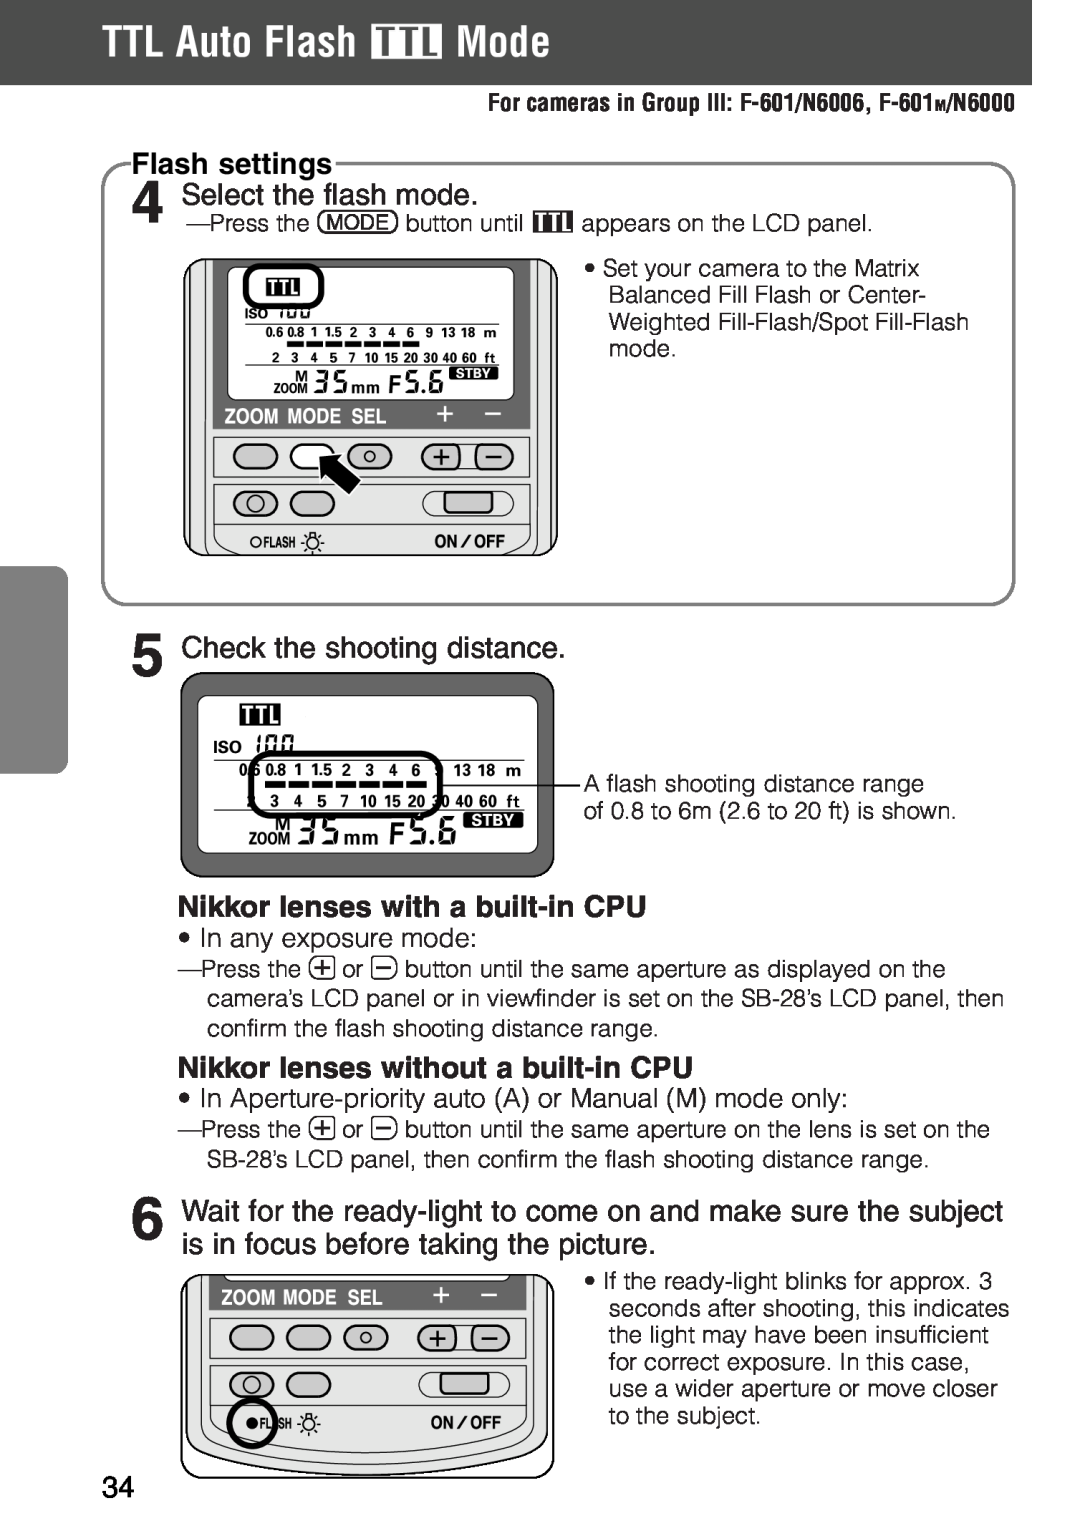 Nikon SB-28 instruction manual TTL Auto Flash t Mode, Flash settings, flash mode, Select the, 5Check the shooting distance 